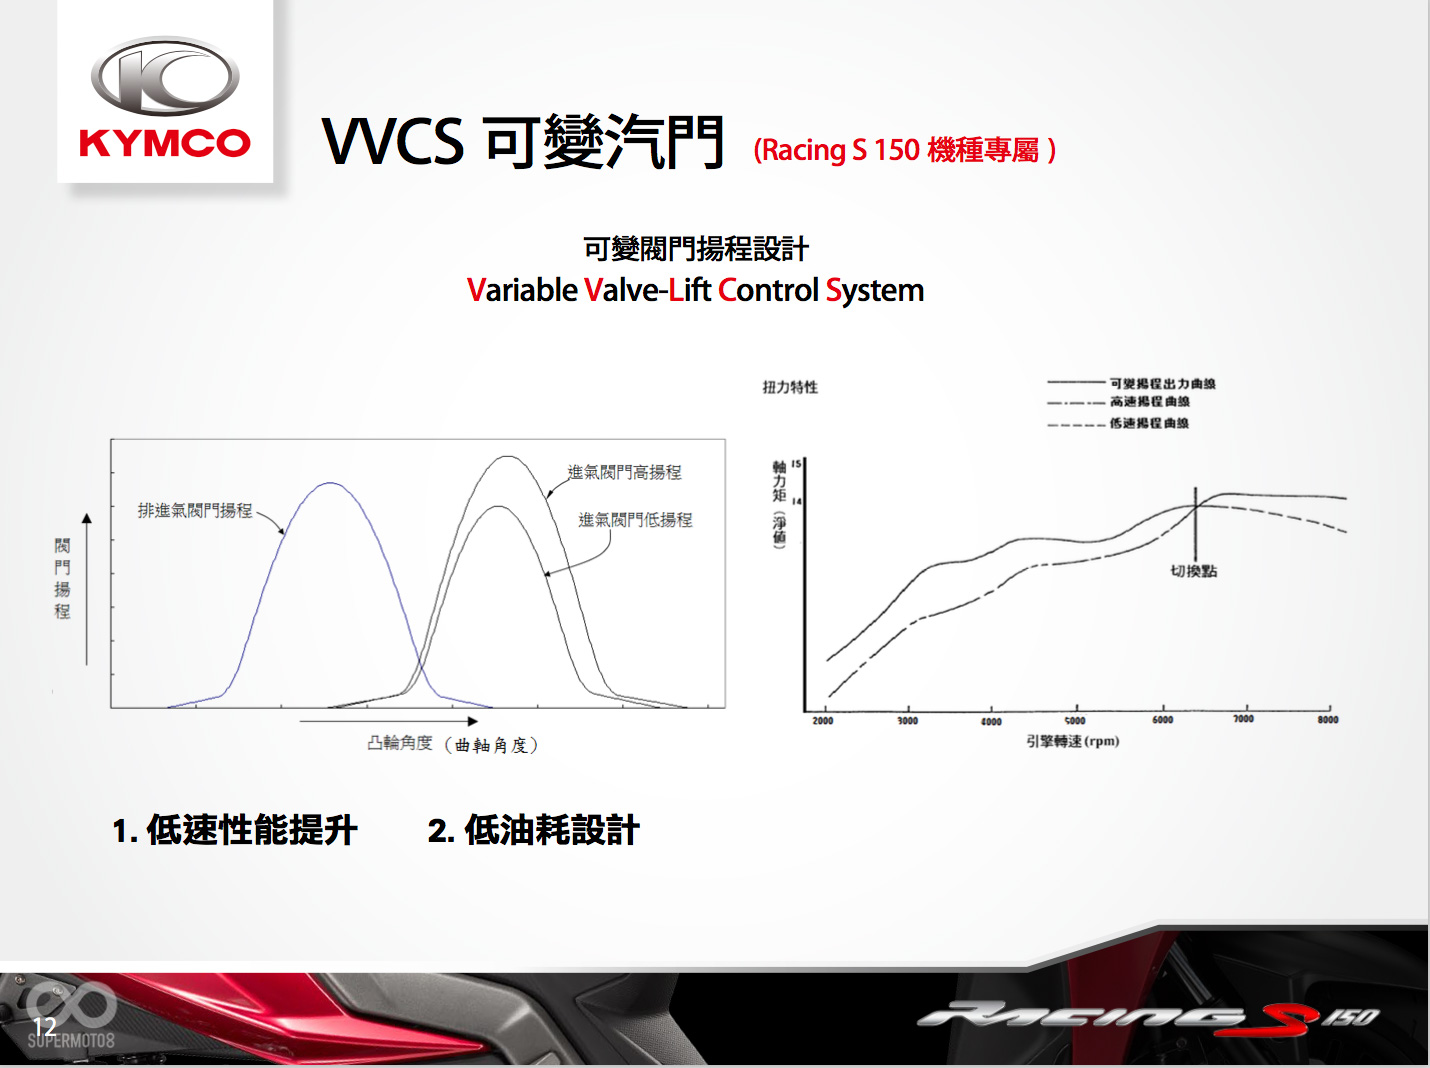 Racing S 150搭載專利的VVCS可變汽門揚程系統，在提升高速性能的同時，低轉表現亦能兼顧，而油耗也能更經濟